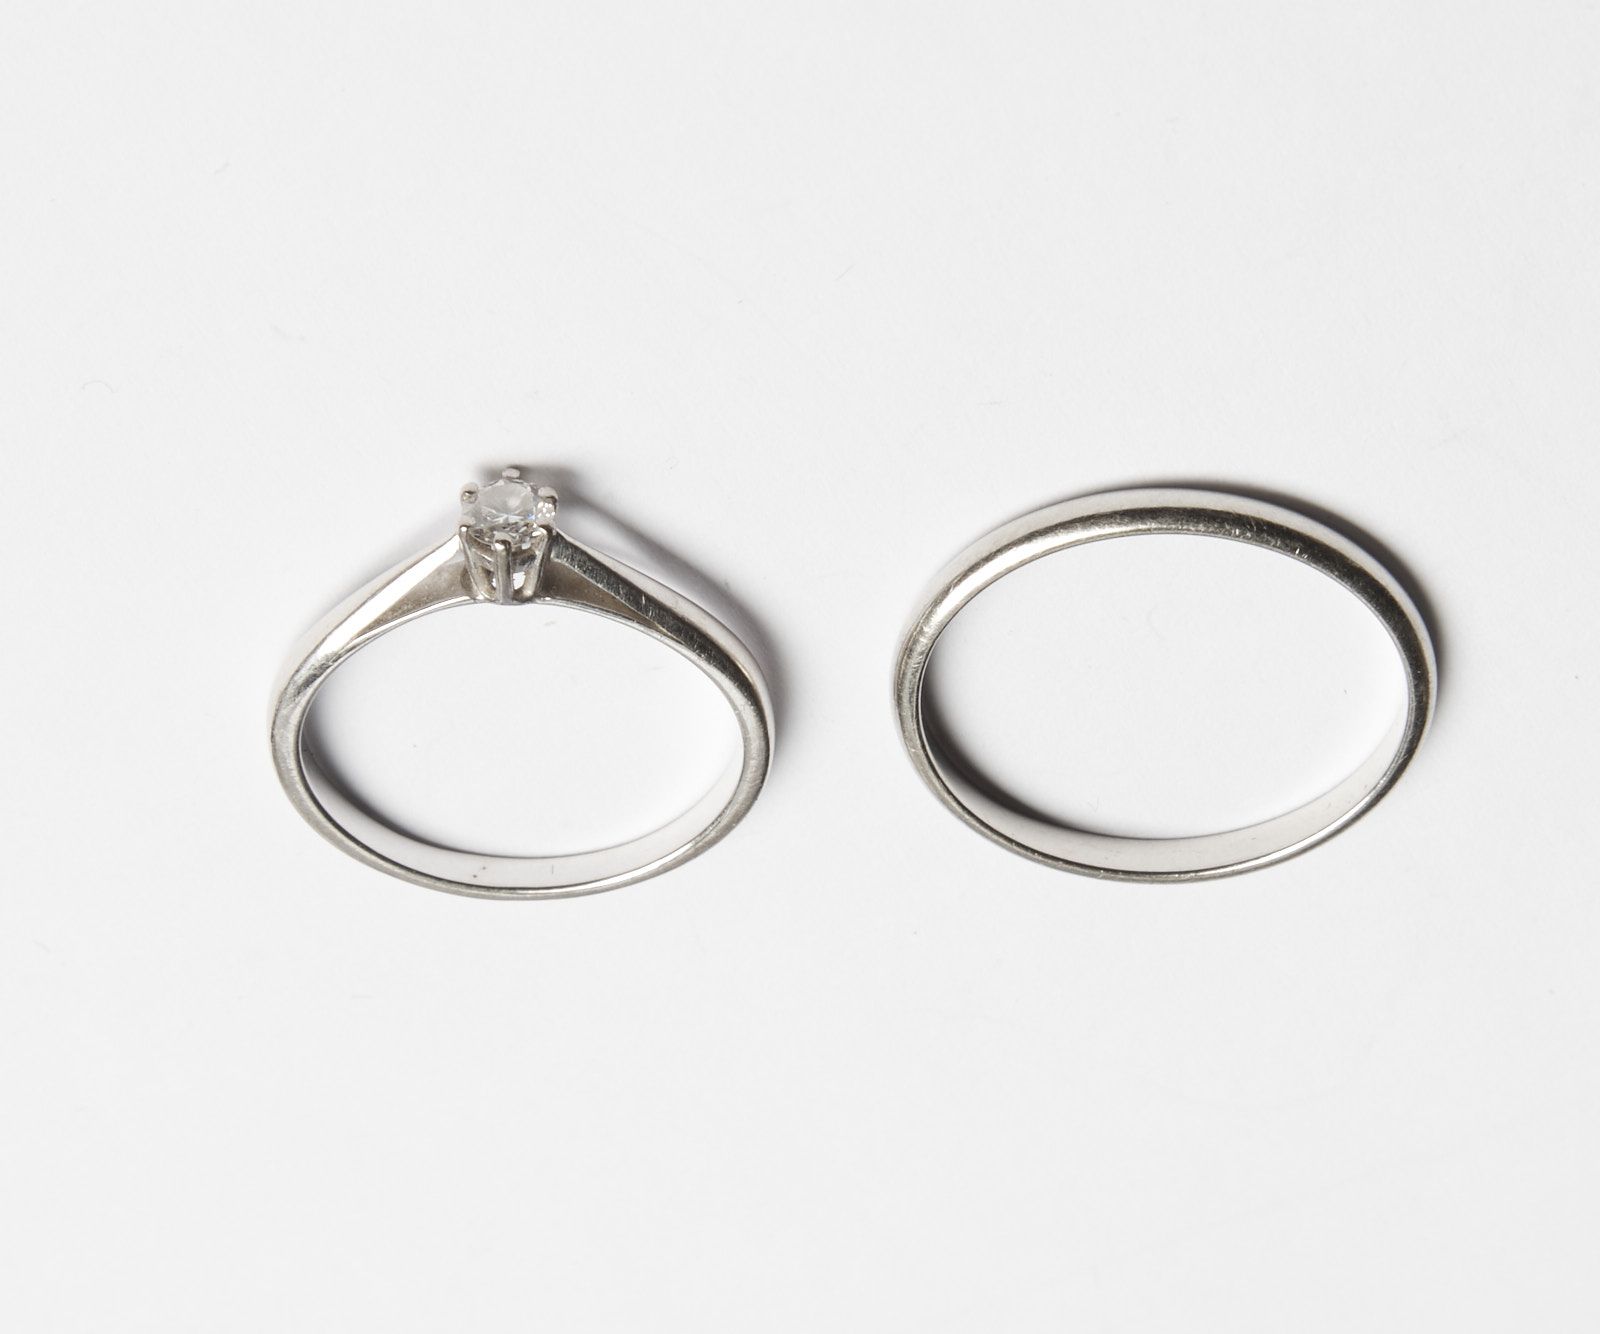 Null 324-白金结婚戒指，手指尺寸58，1.8克 一枚白金戒指，镶嵌0.10克拉的小钻石，手指尺寸53，重量2克1754